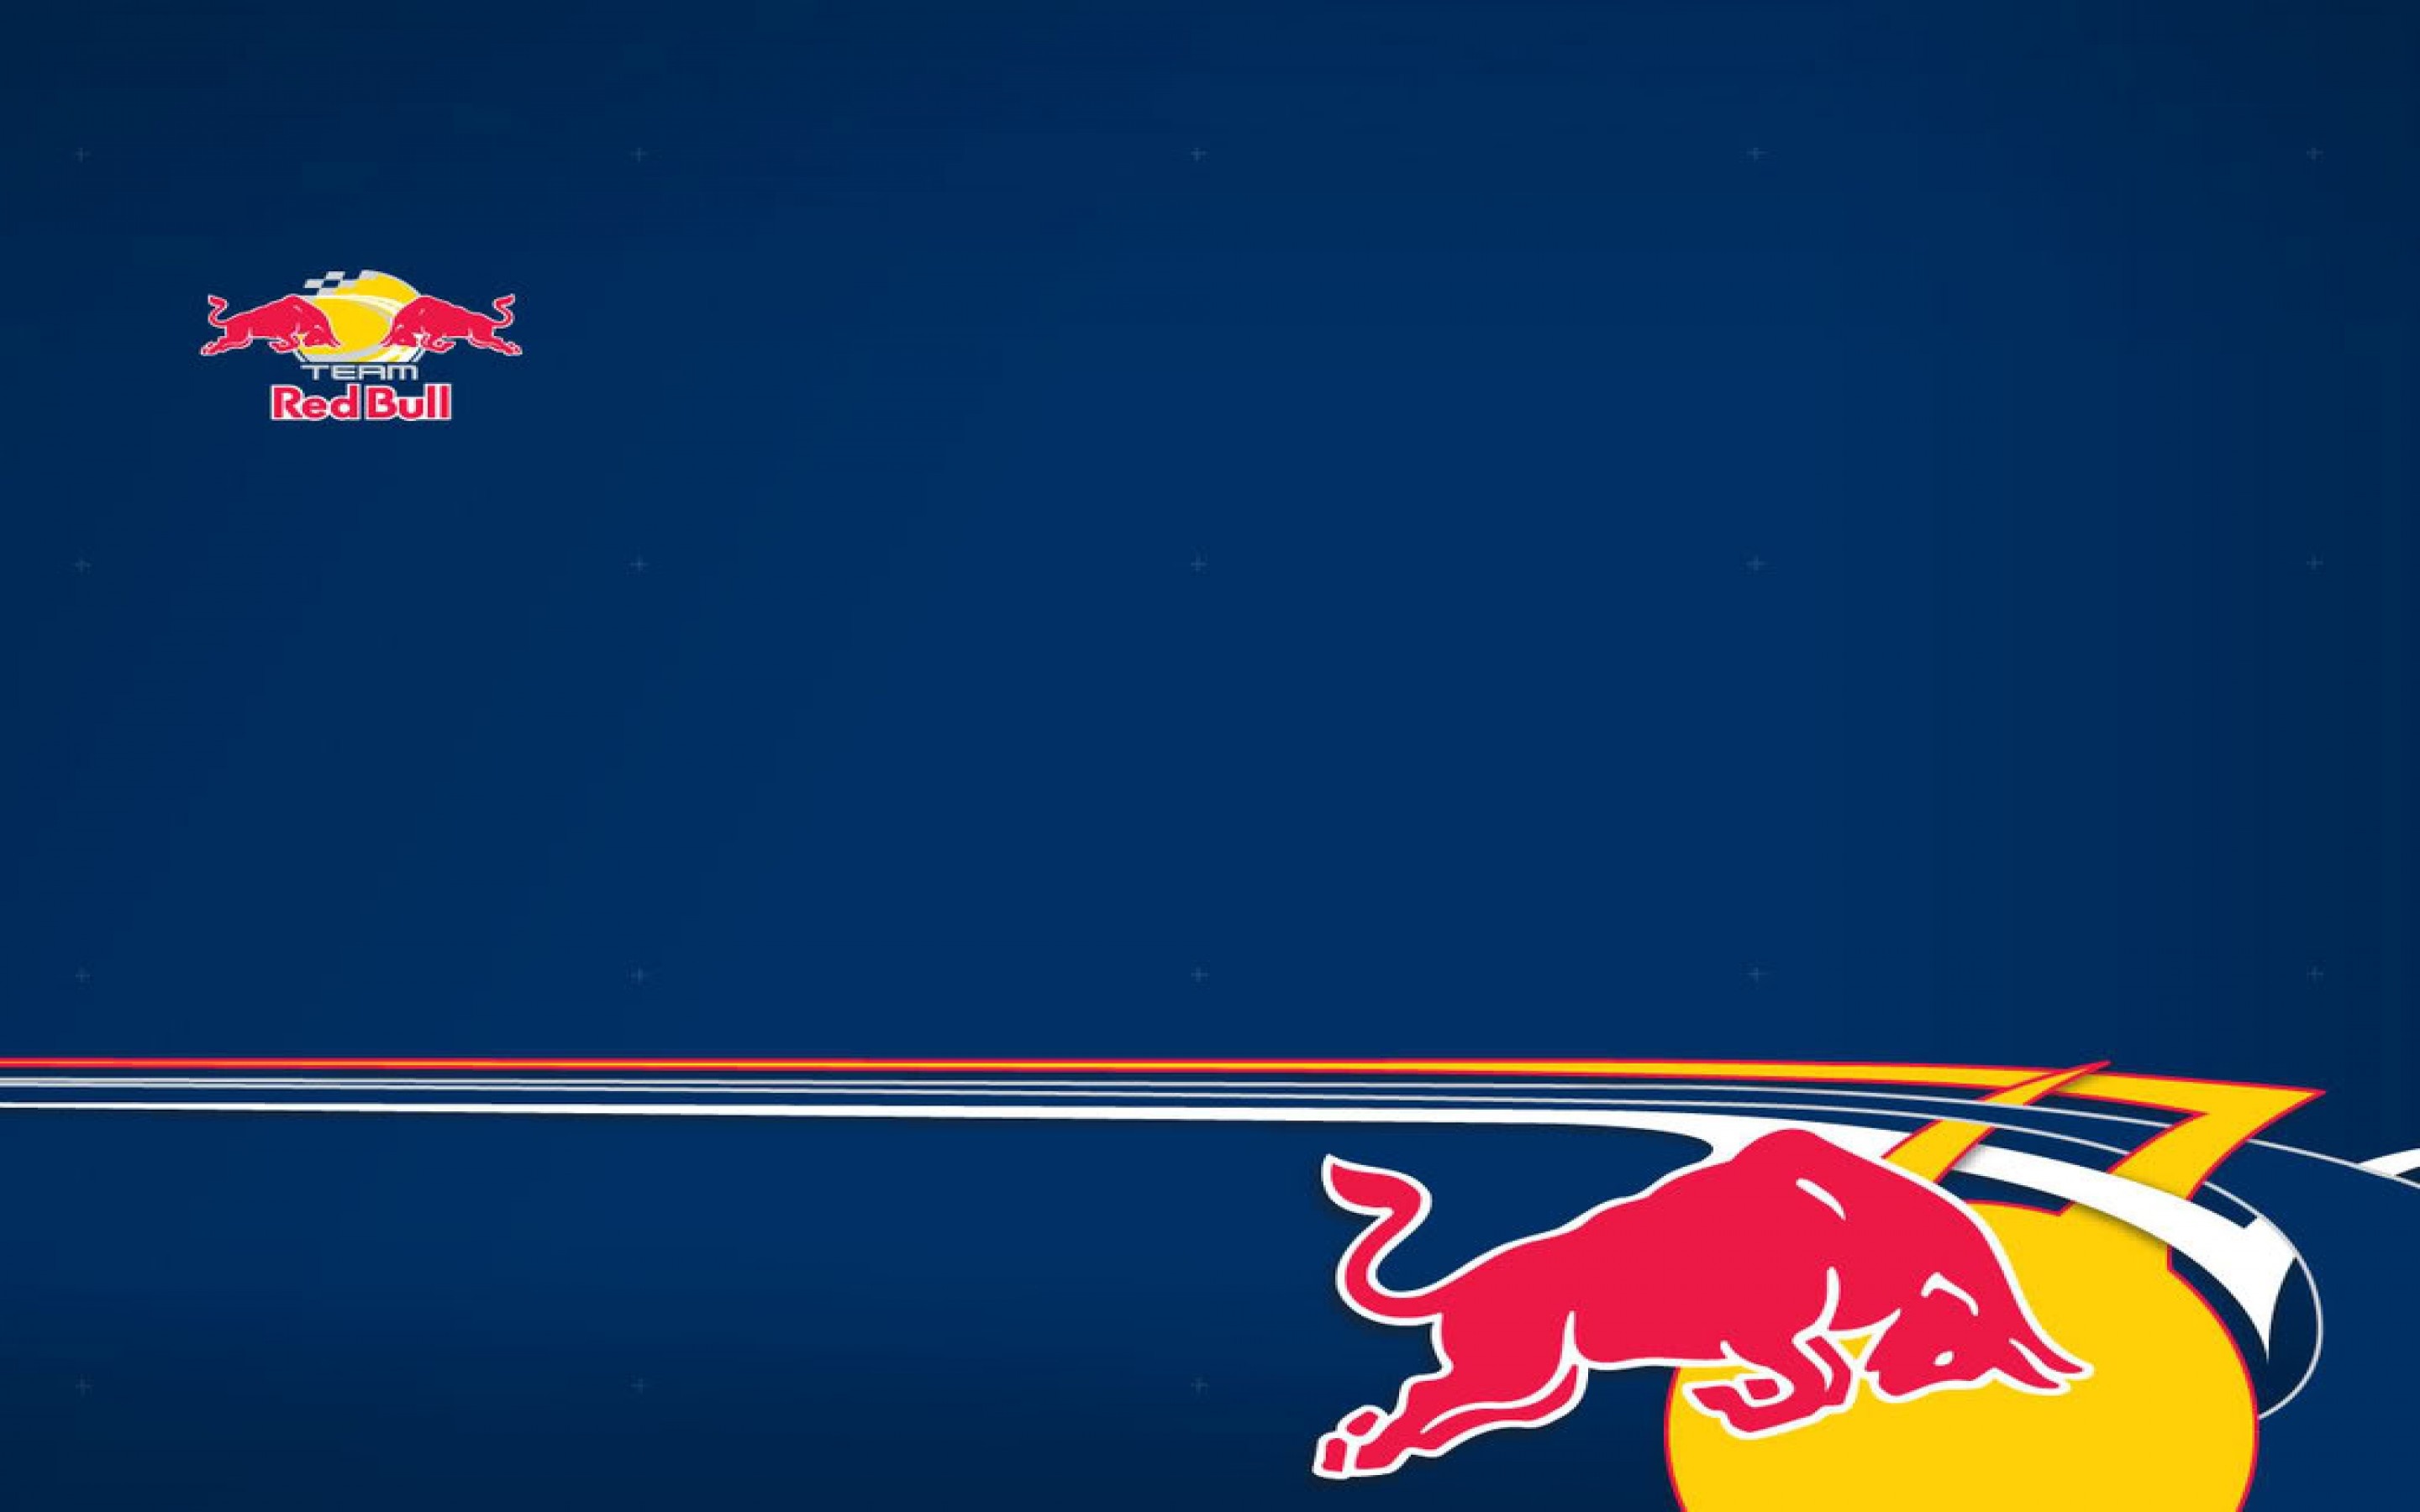 Red Bull Logo: Red Bull Cliff Diving World Series, Dietrich Mateschitz, An energy drink. 2880x1800 HD Background.